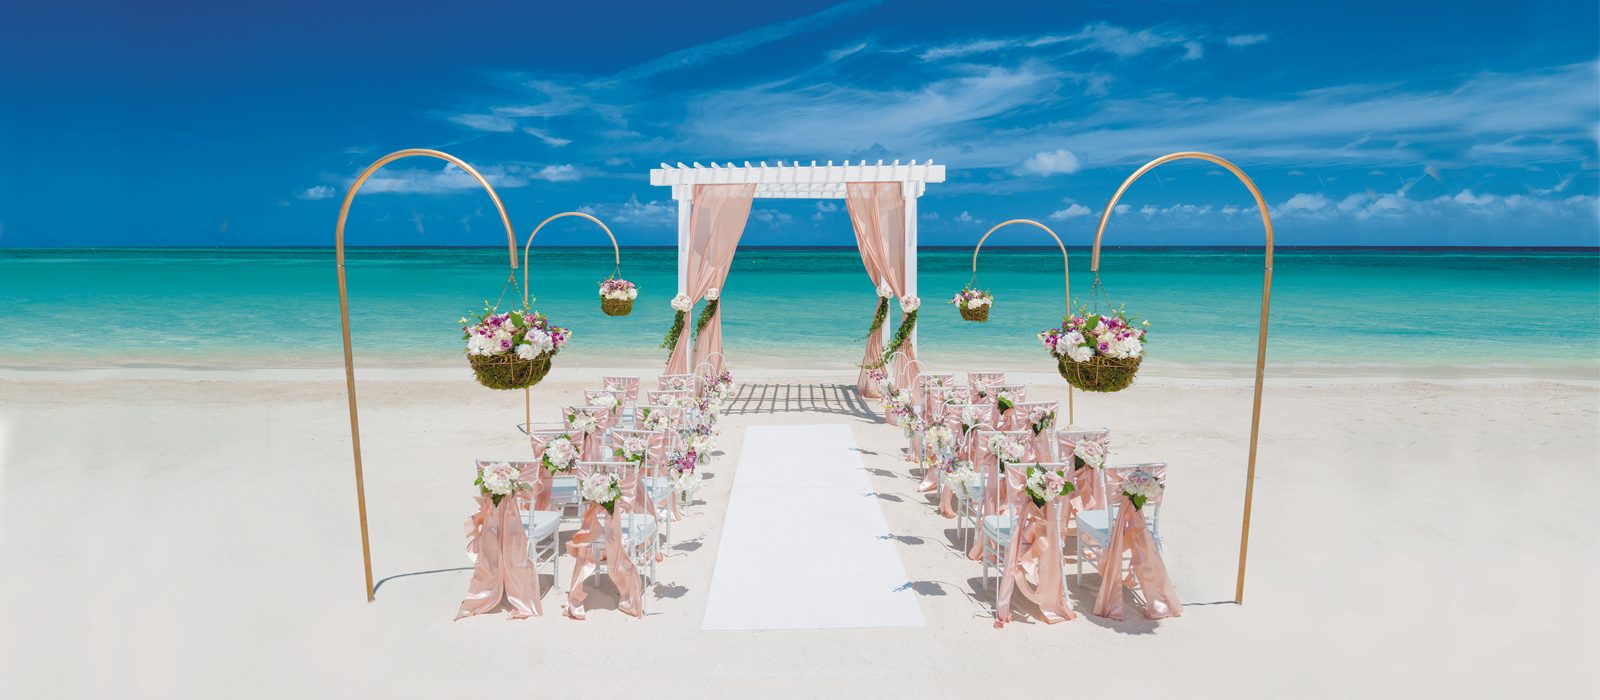 https://www.beachweddings.co.uk/wp-content/uploads/2019/07/free-weddings-beach-wedding-abroad-header--1600x700.jpg